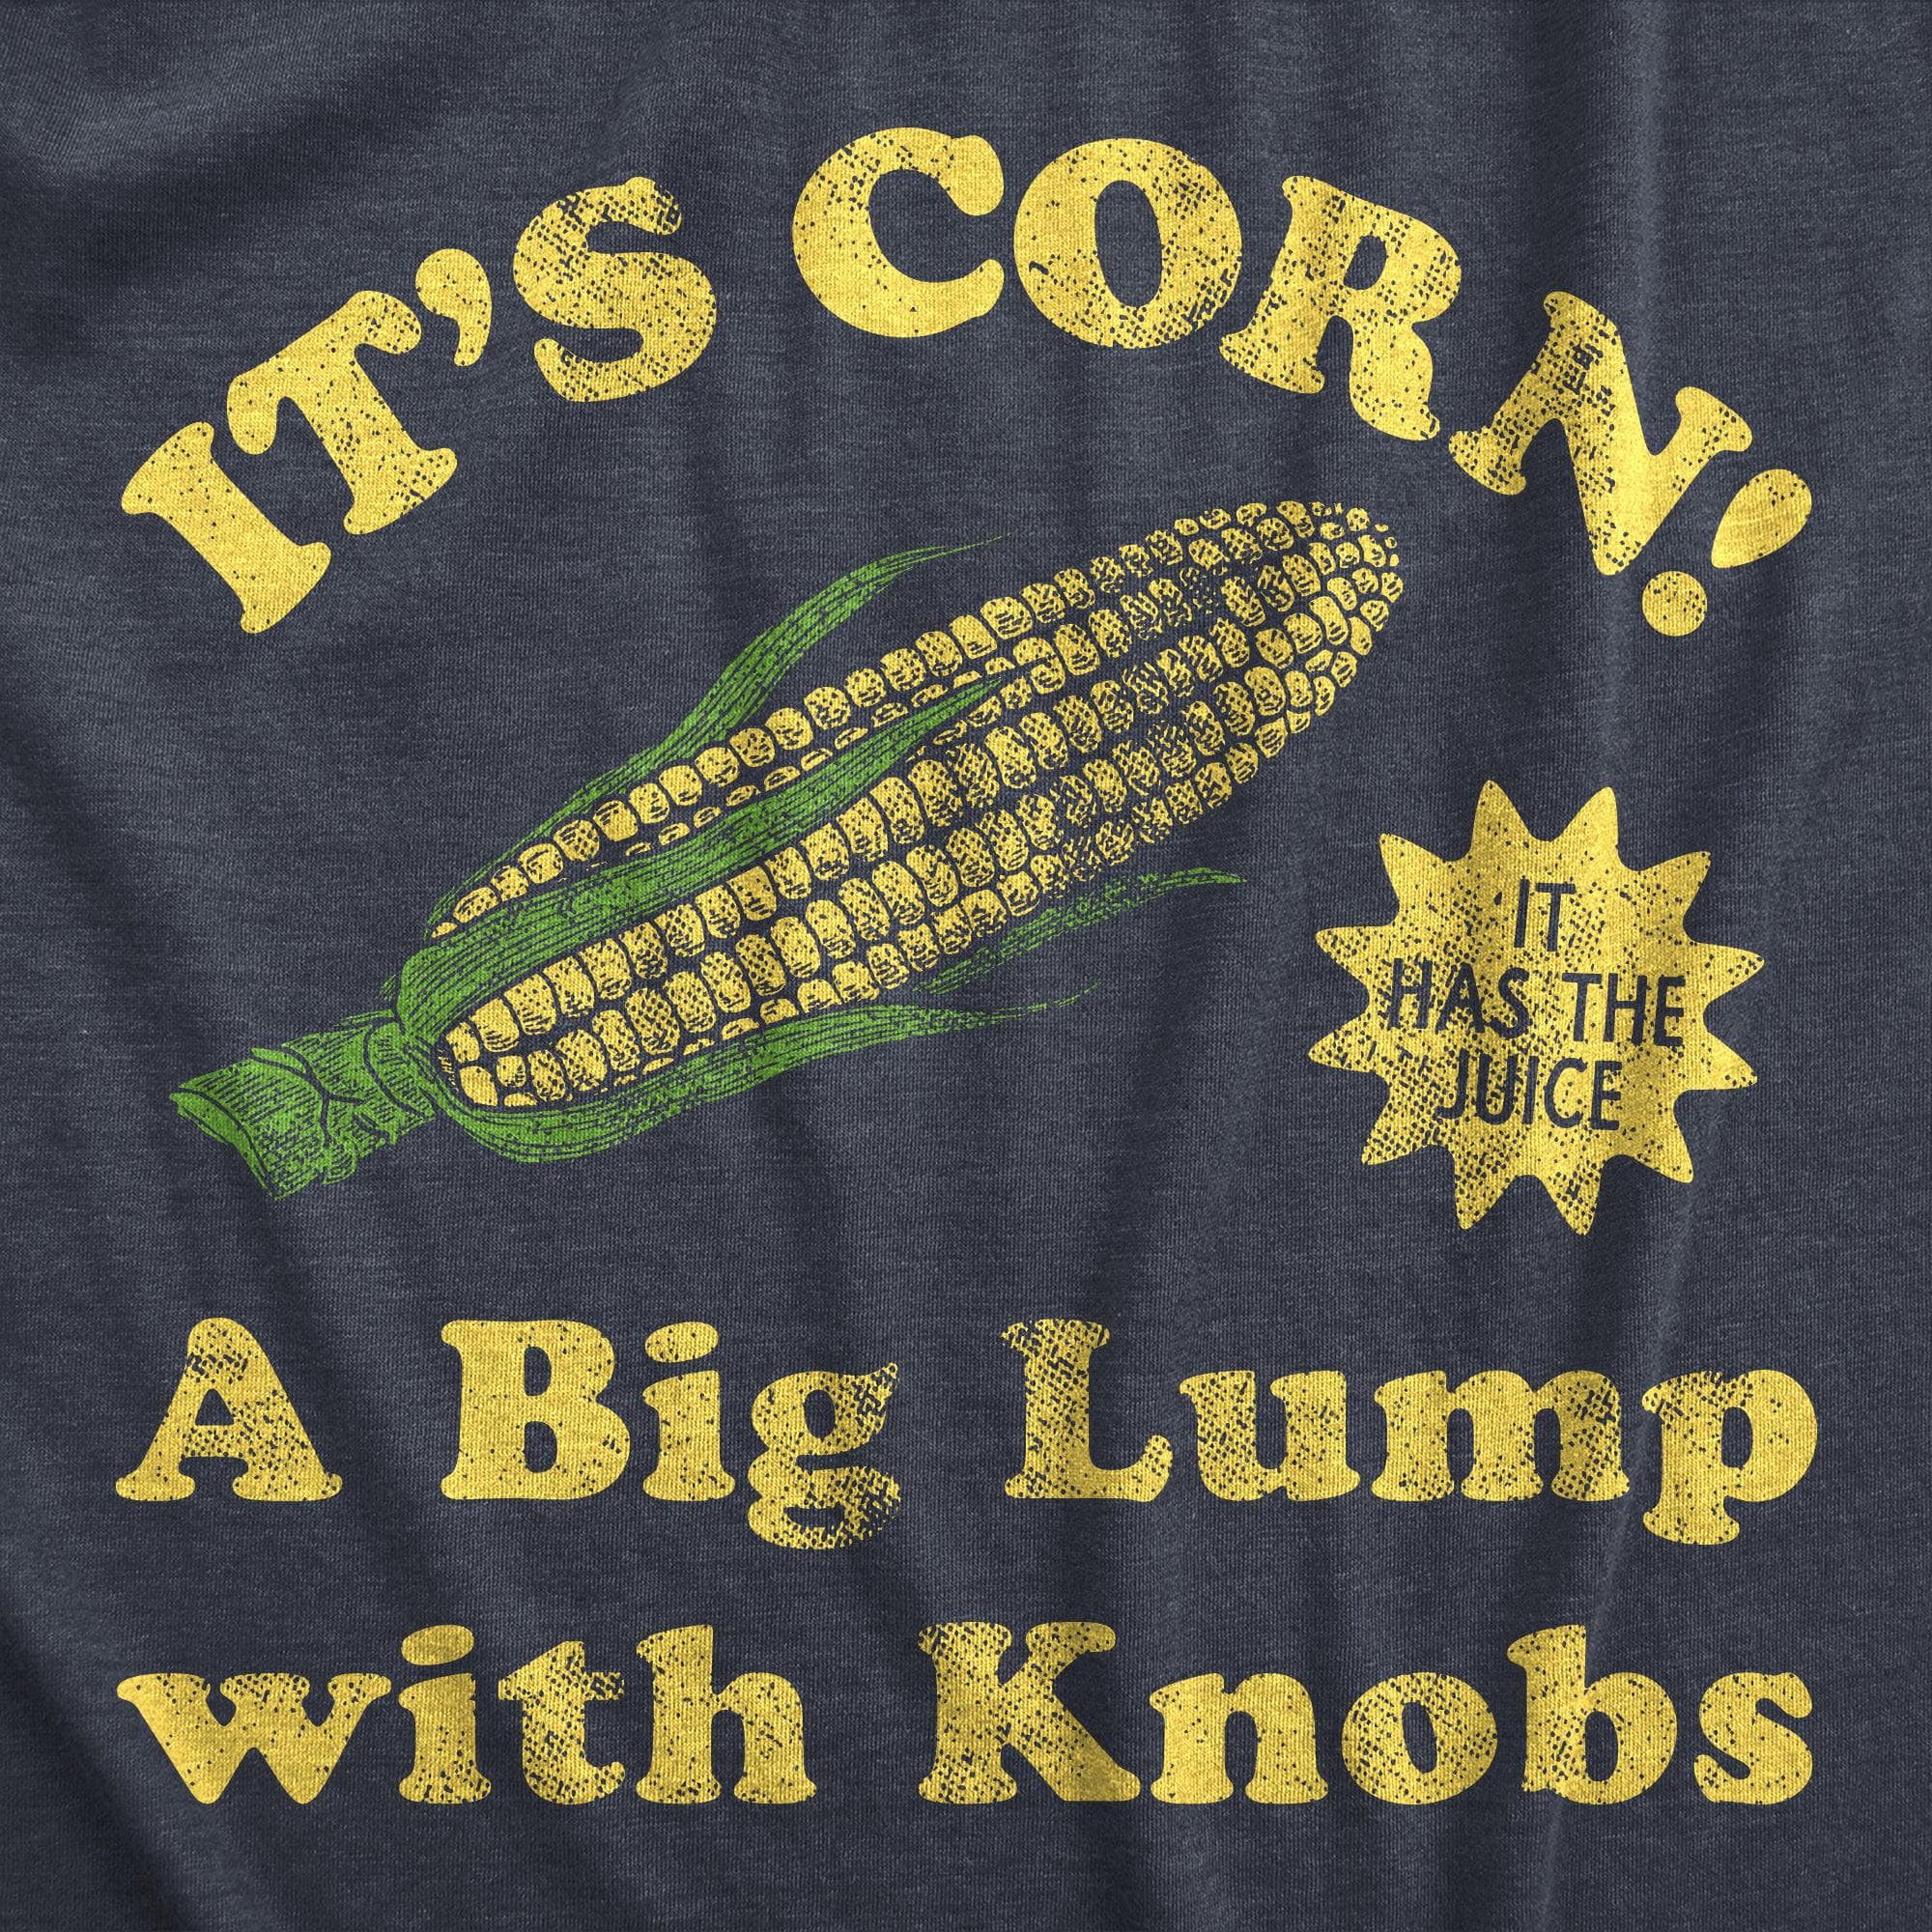 Its Corn A Big Lump With Knobs Men's Tshirt  -  Crazy Dog T-Shirts